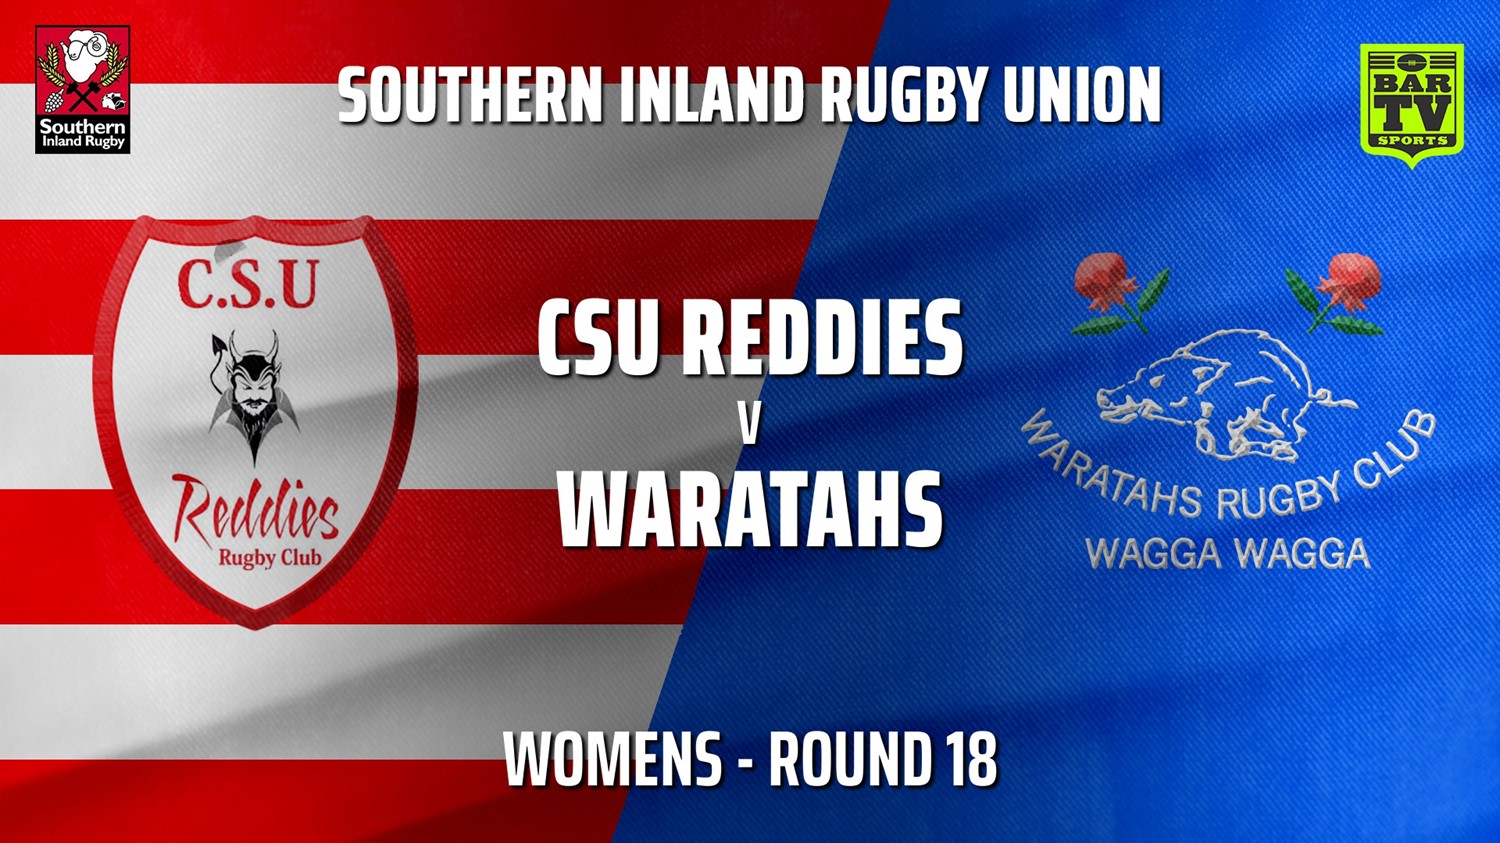 210814-Southern Inland Rugby Union Round 18 - Womens - CSU Reddies v Wagga Waratahs Slate Image